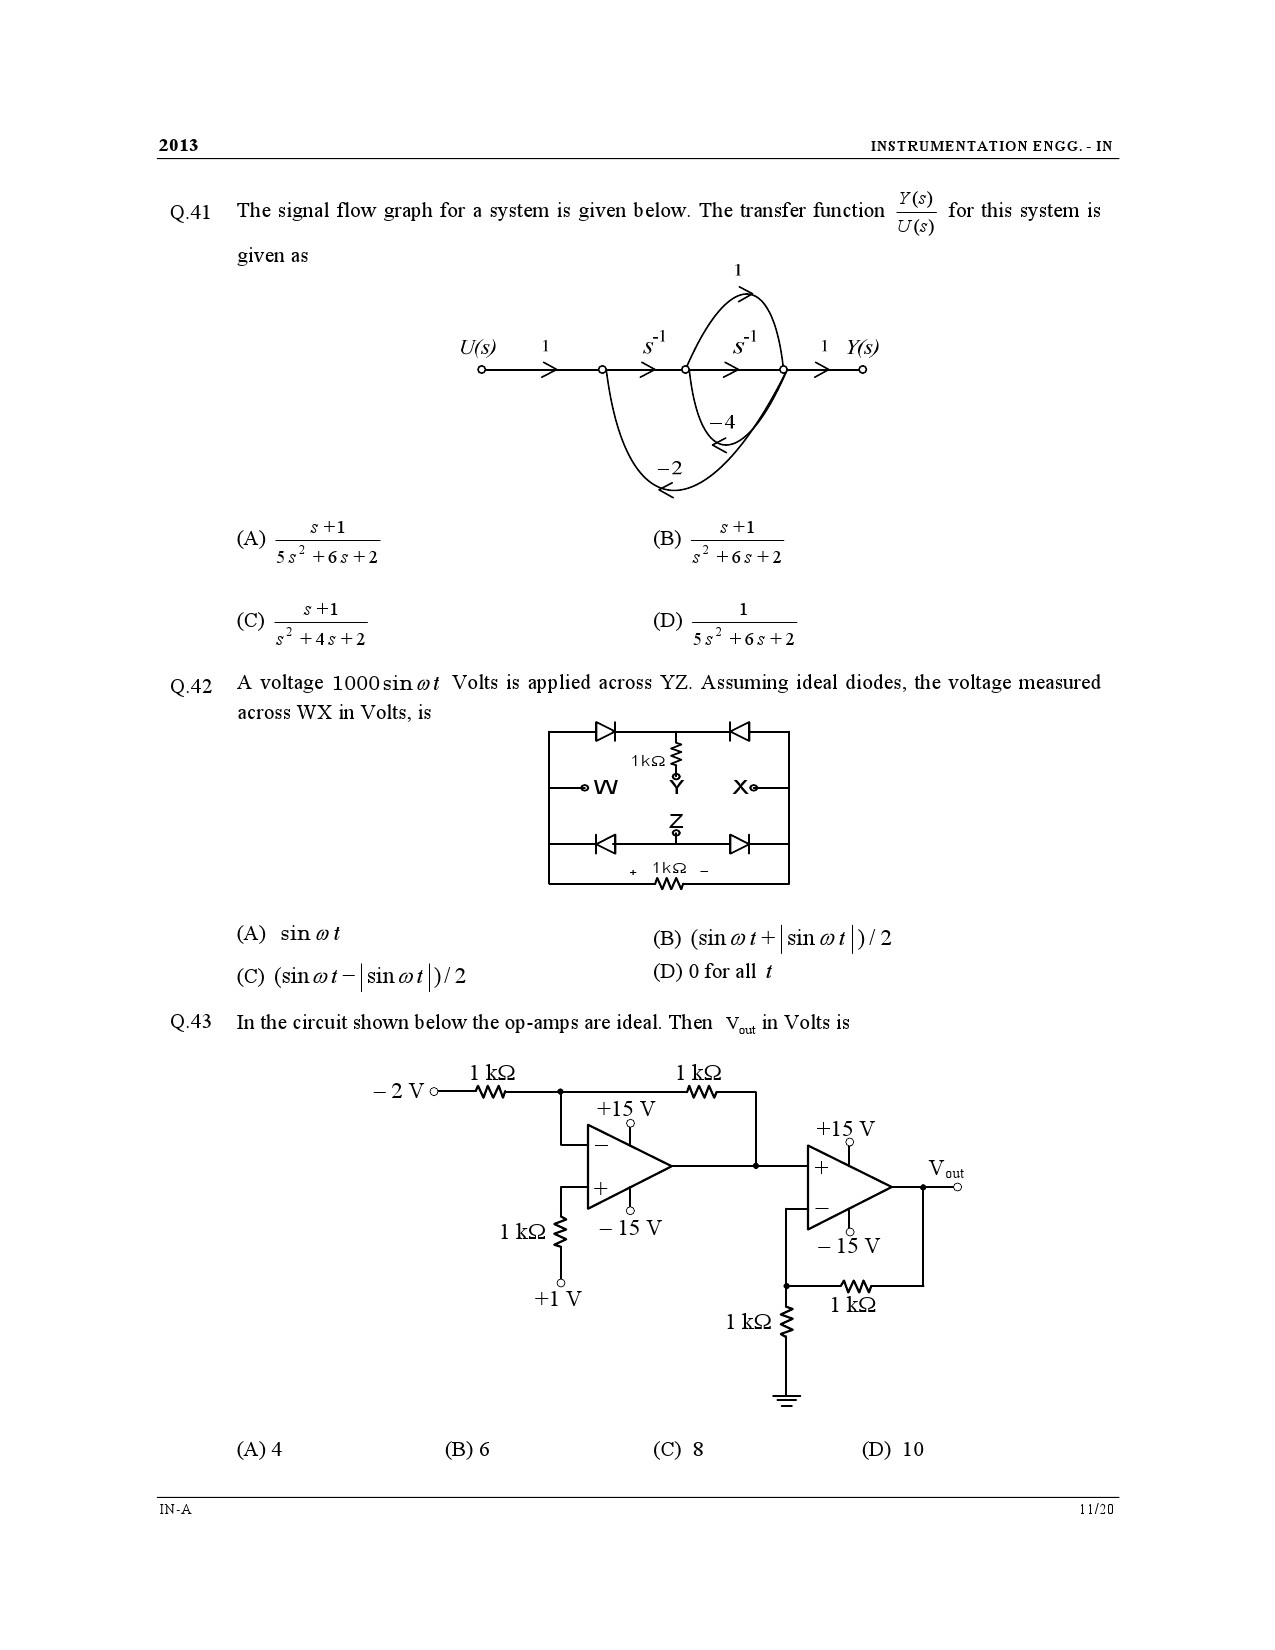 GATE Exam Question Paper 2013 Instrumentation Engineering 11